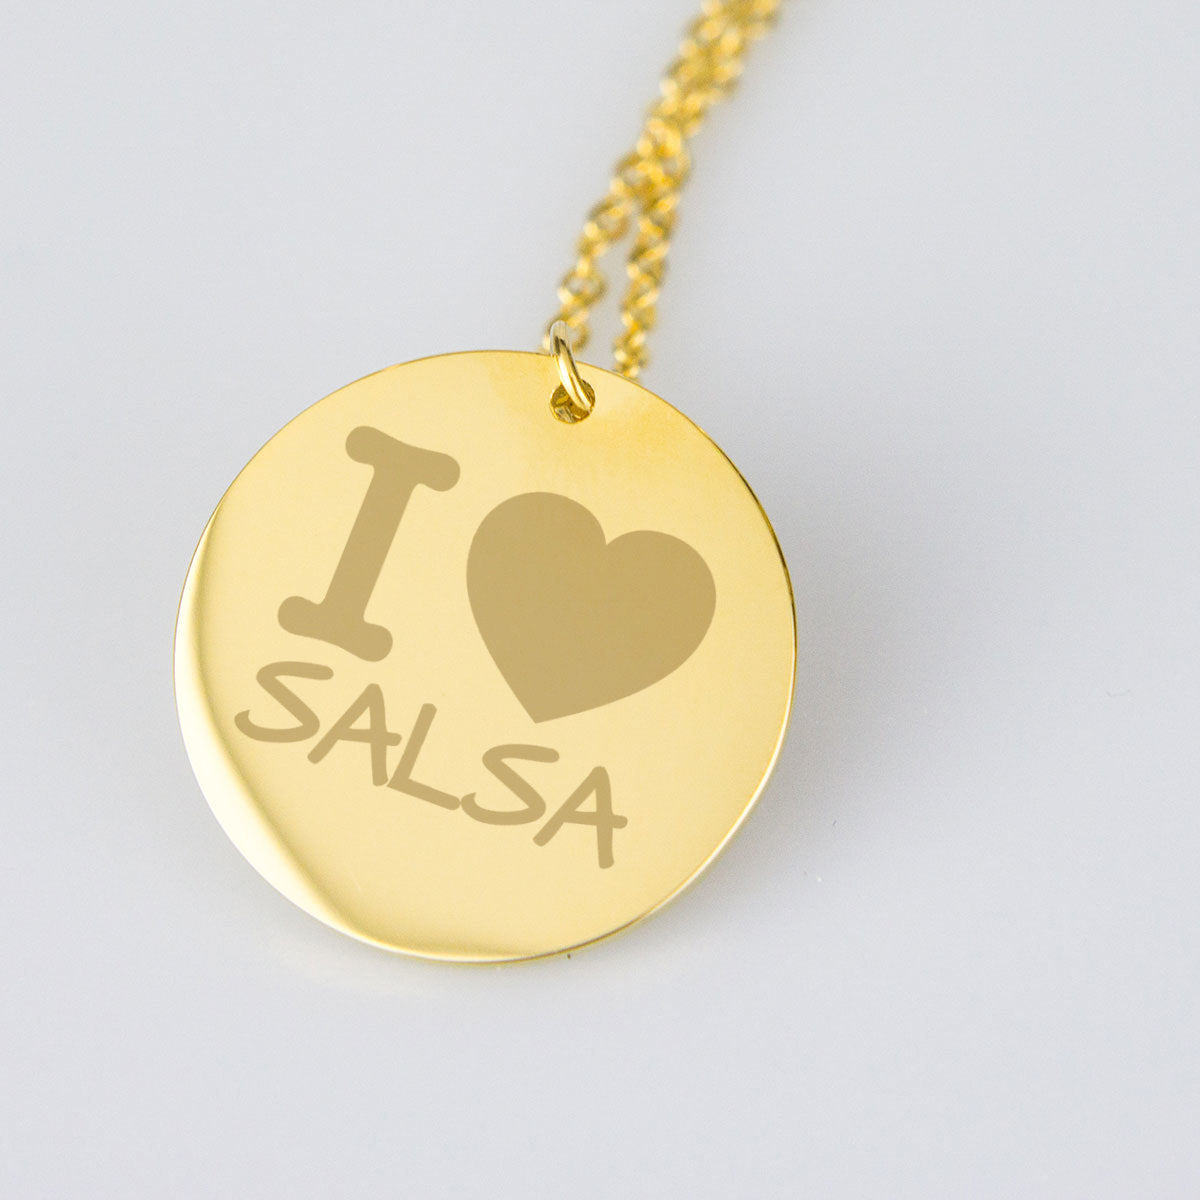 Salsa Lovers Premium Pendant - World Salsa Championships